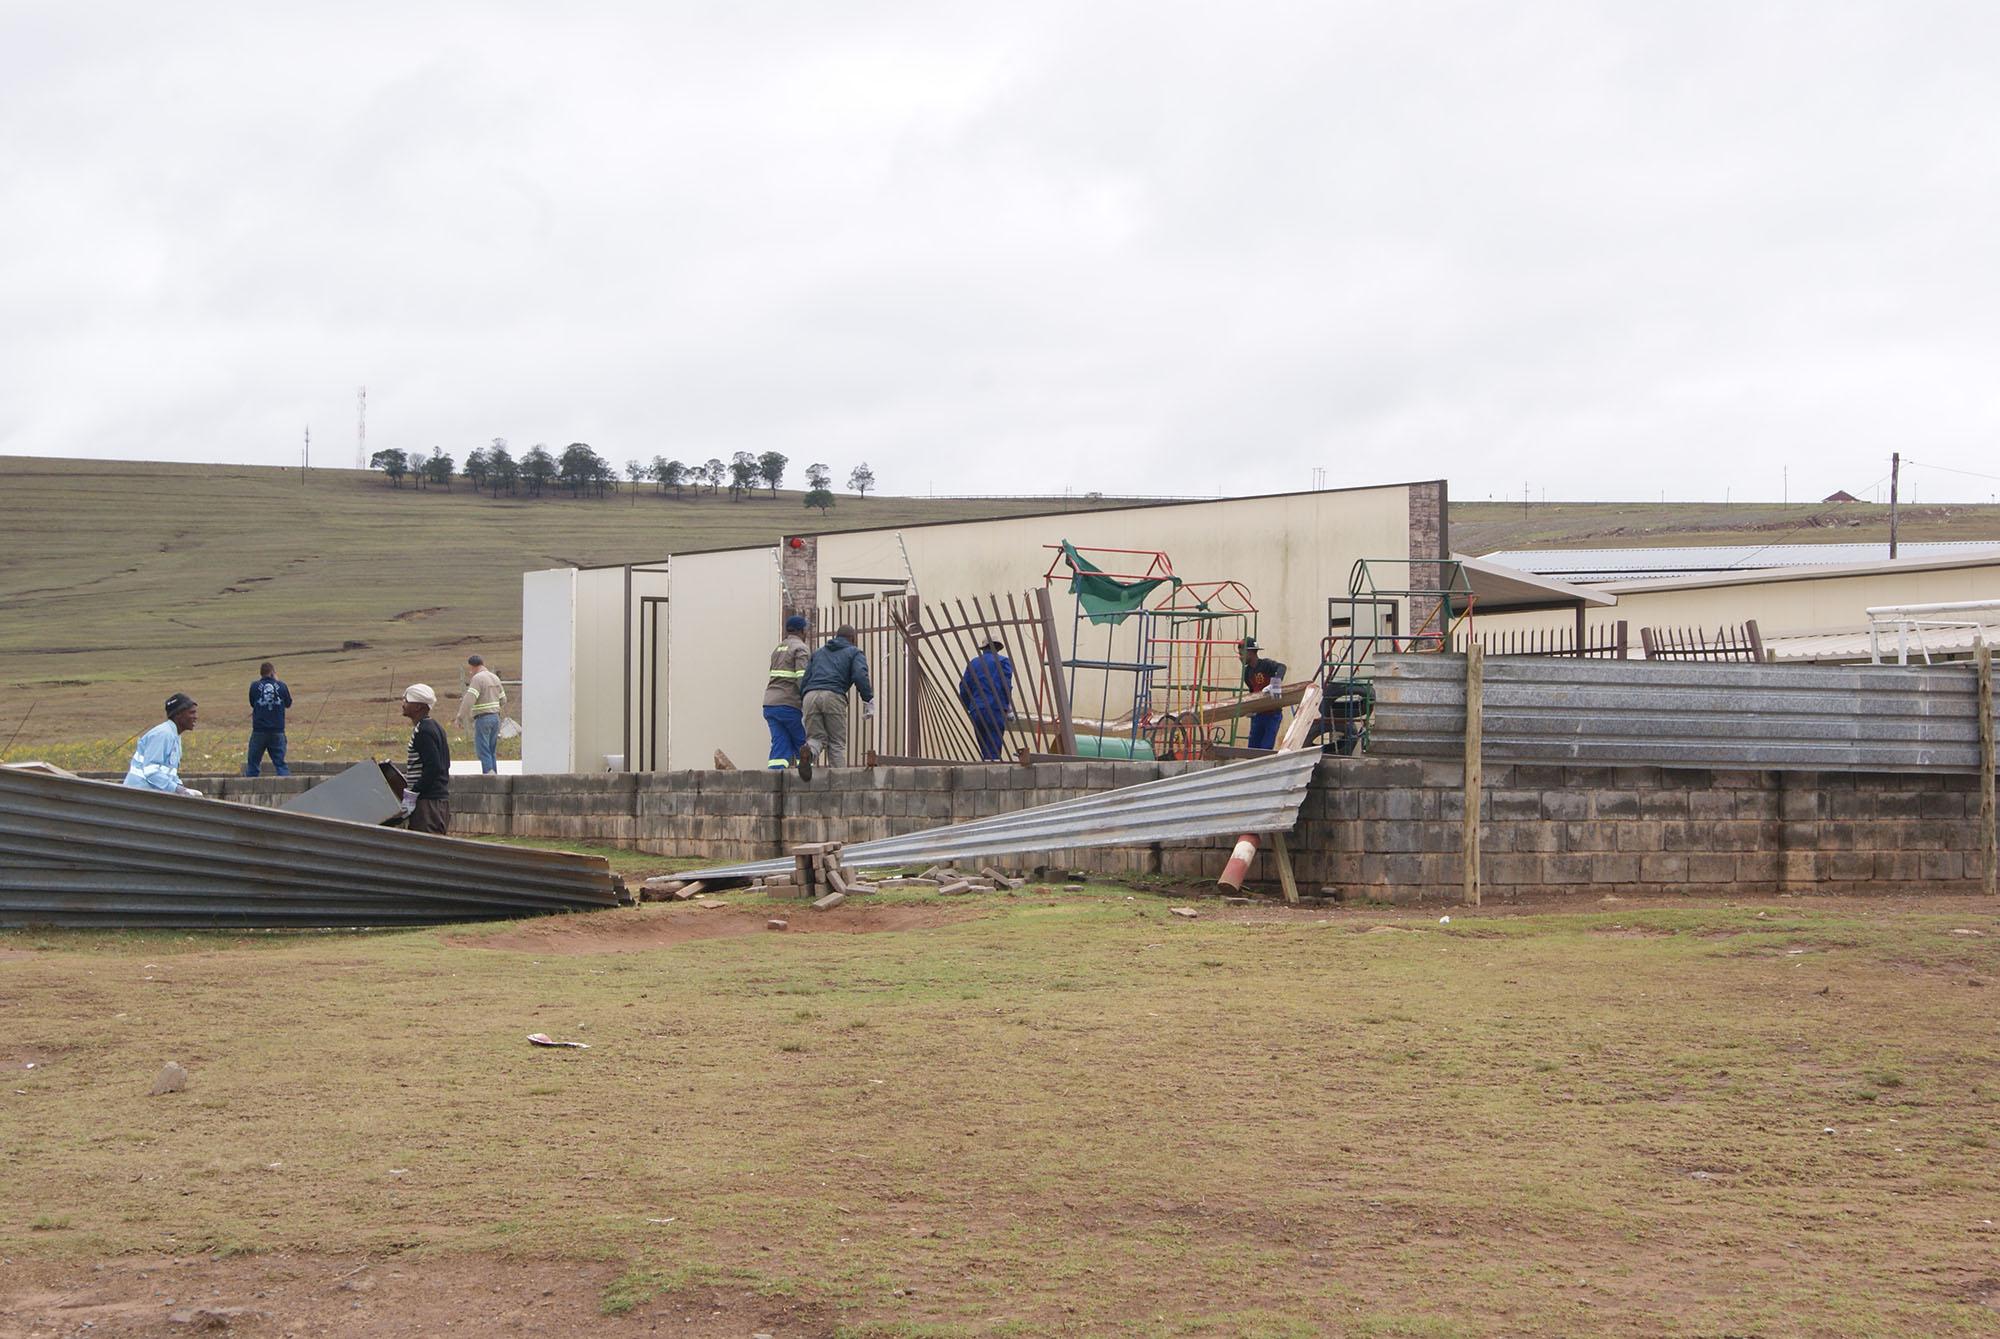 Child & Family Foundation Nelson Mandela School - Renovations continue